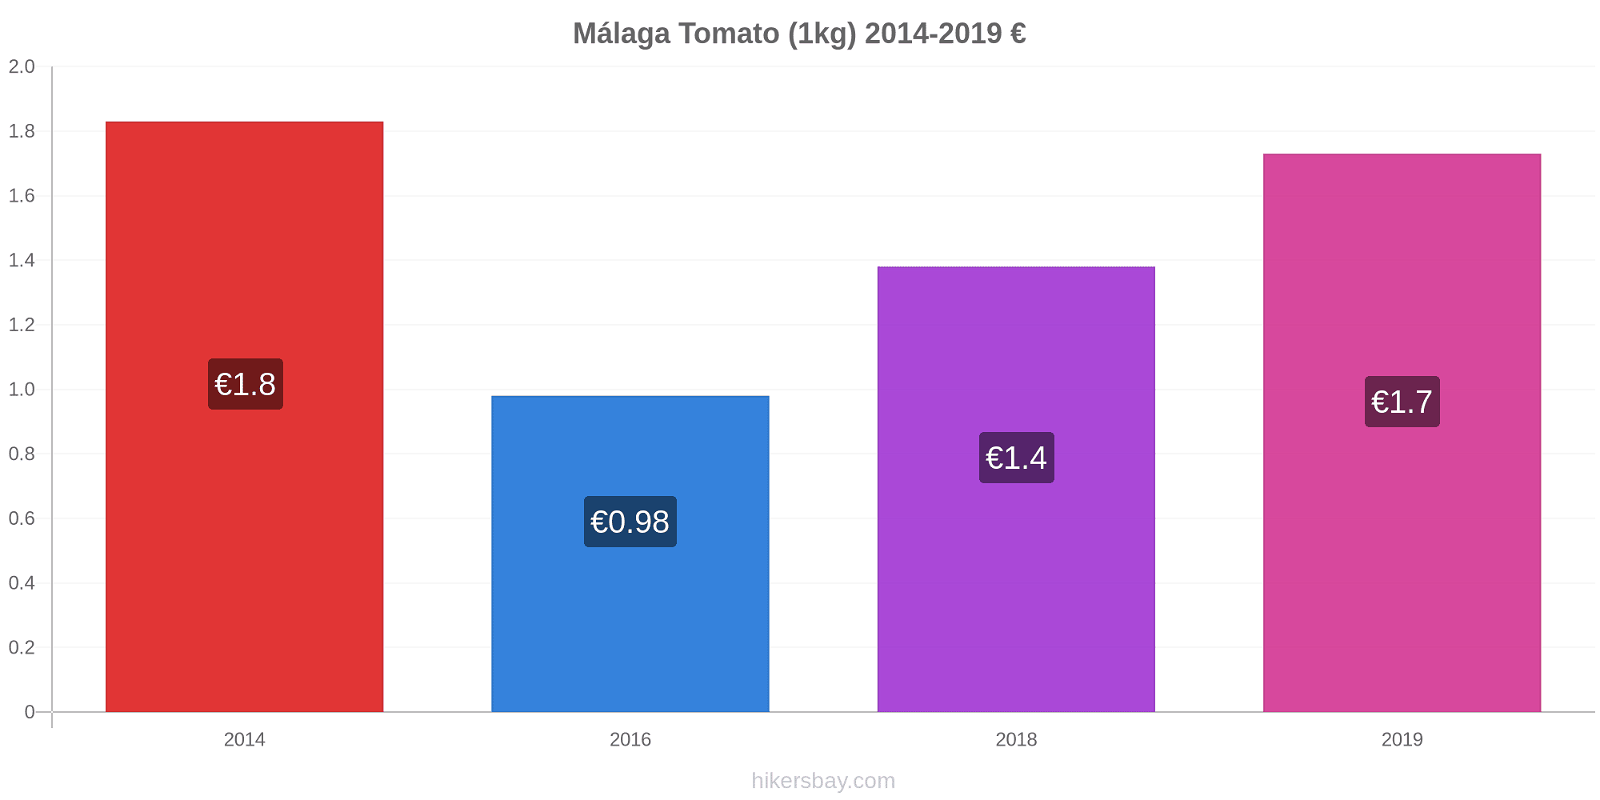 Málaga price changes Tomato (1kg) hikersbay.com